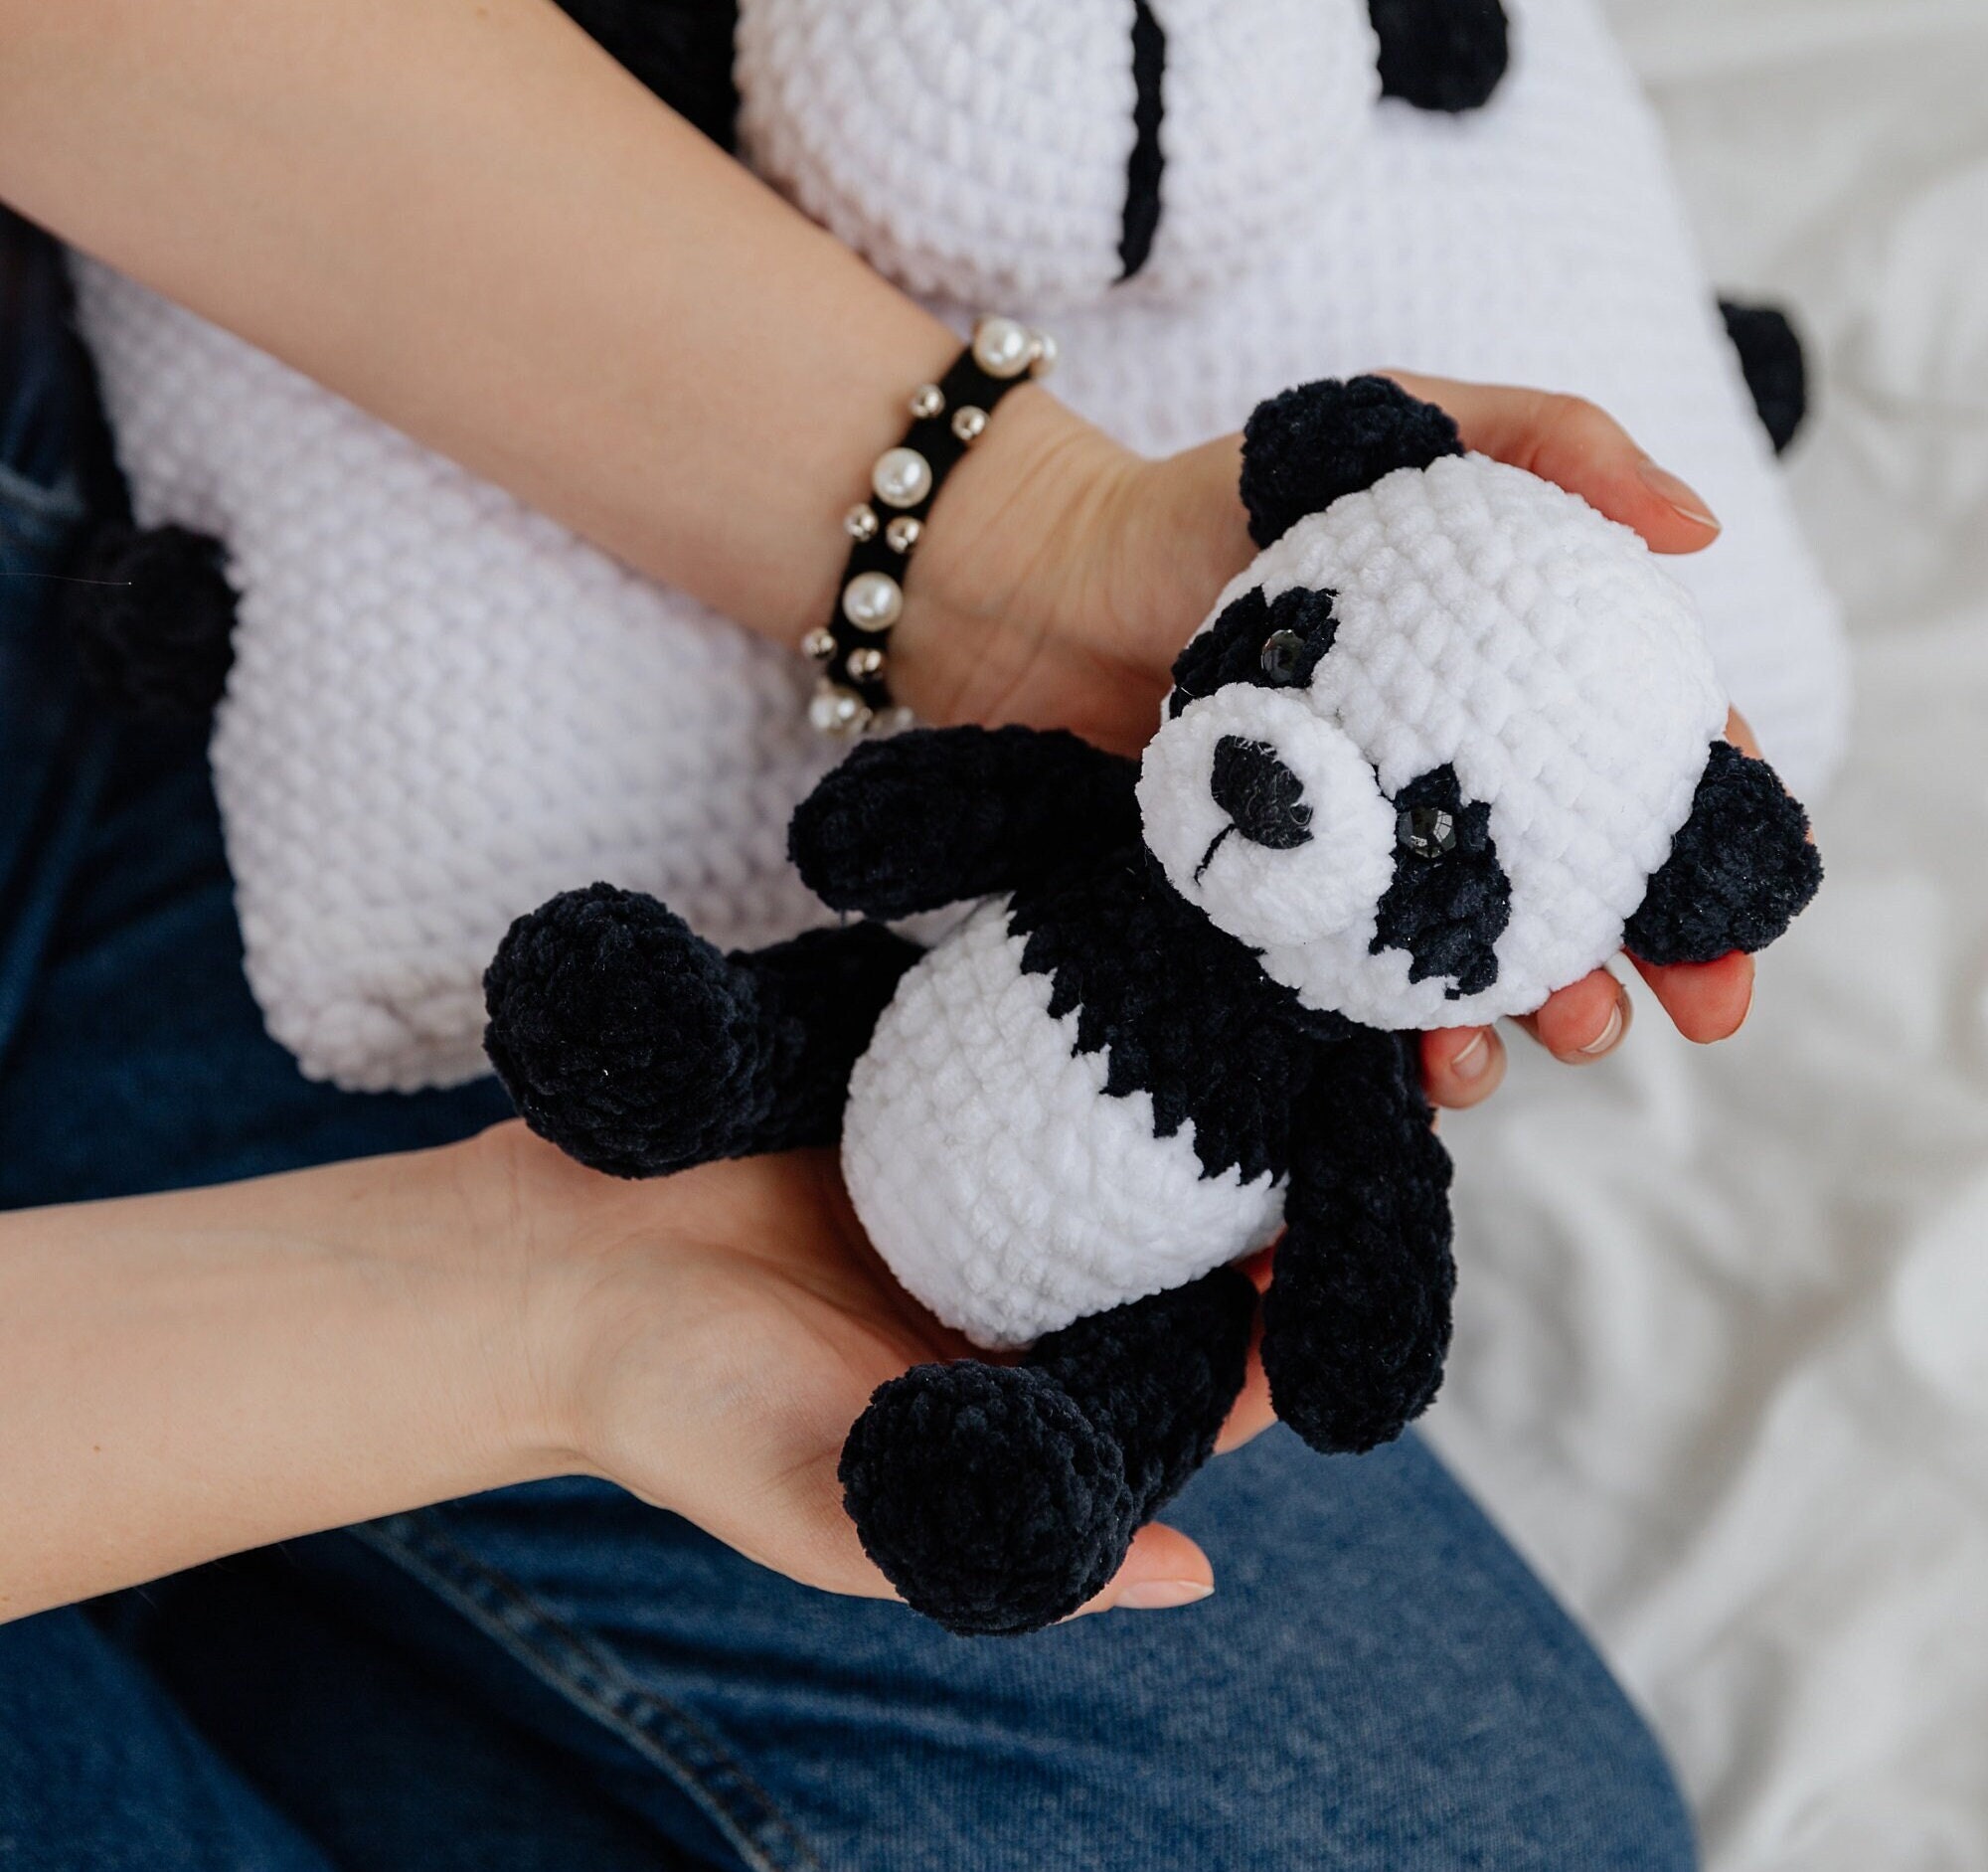 Crochet Kits DIY Crochet Amigurumi Panda Brother Pattern, Yarn, Crochet  Hook, Stuffing with All Accessories for Beginner : : Arts & Crafts